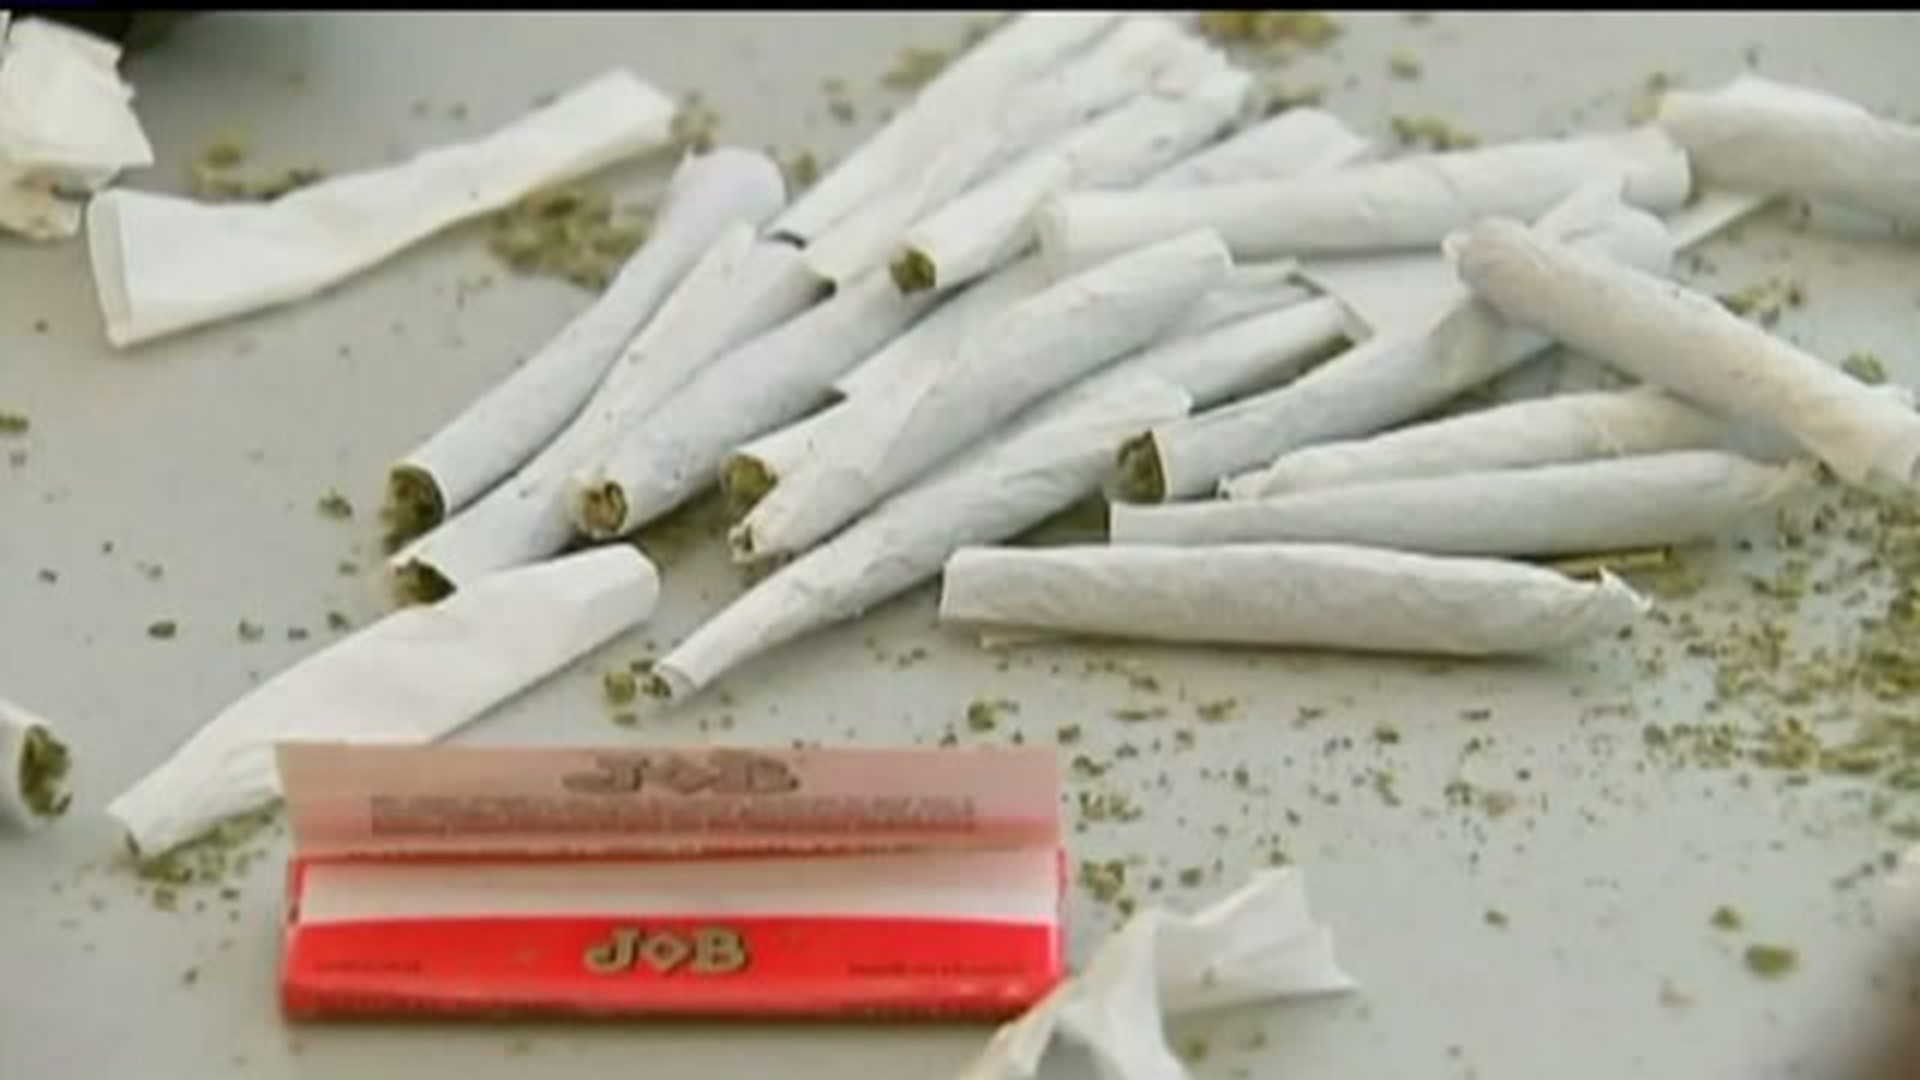 Officials looking to decriminalize marijuana